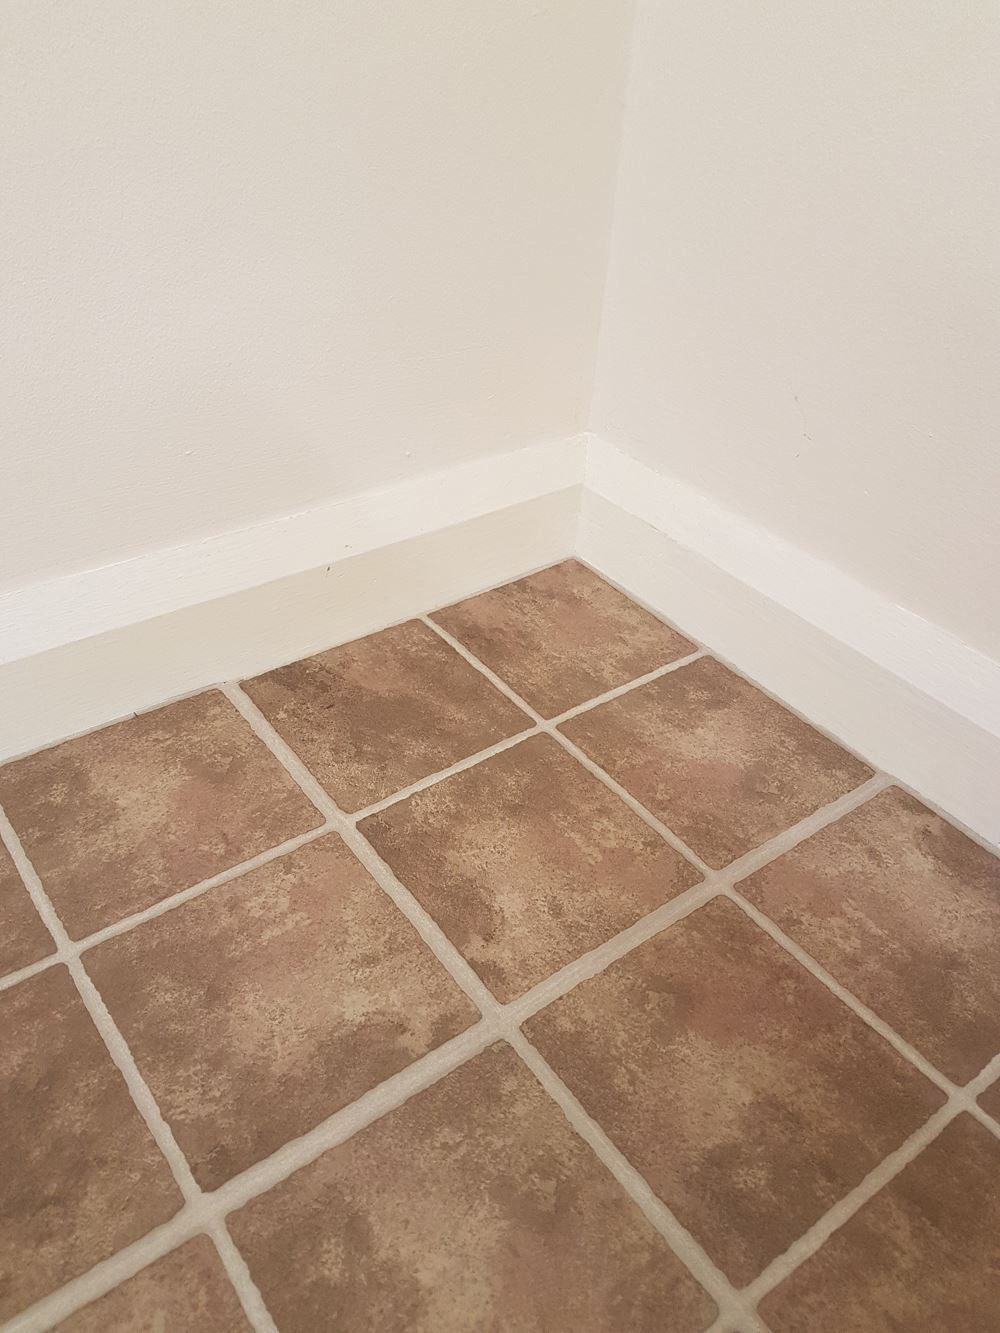 Self Adhesive Bathroom Floor Tiles
 Floor Tiles Self Adhesive Vinyl Flooring Kitchen Bathroom